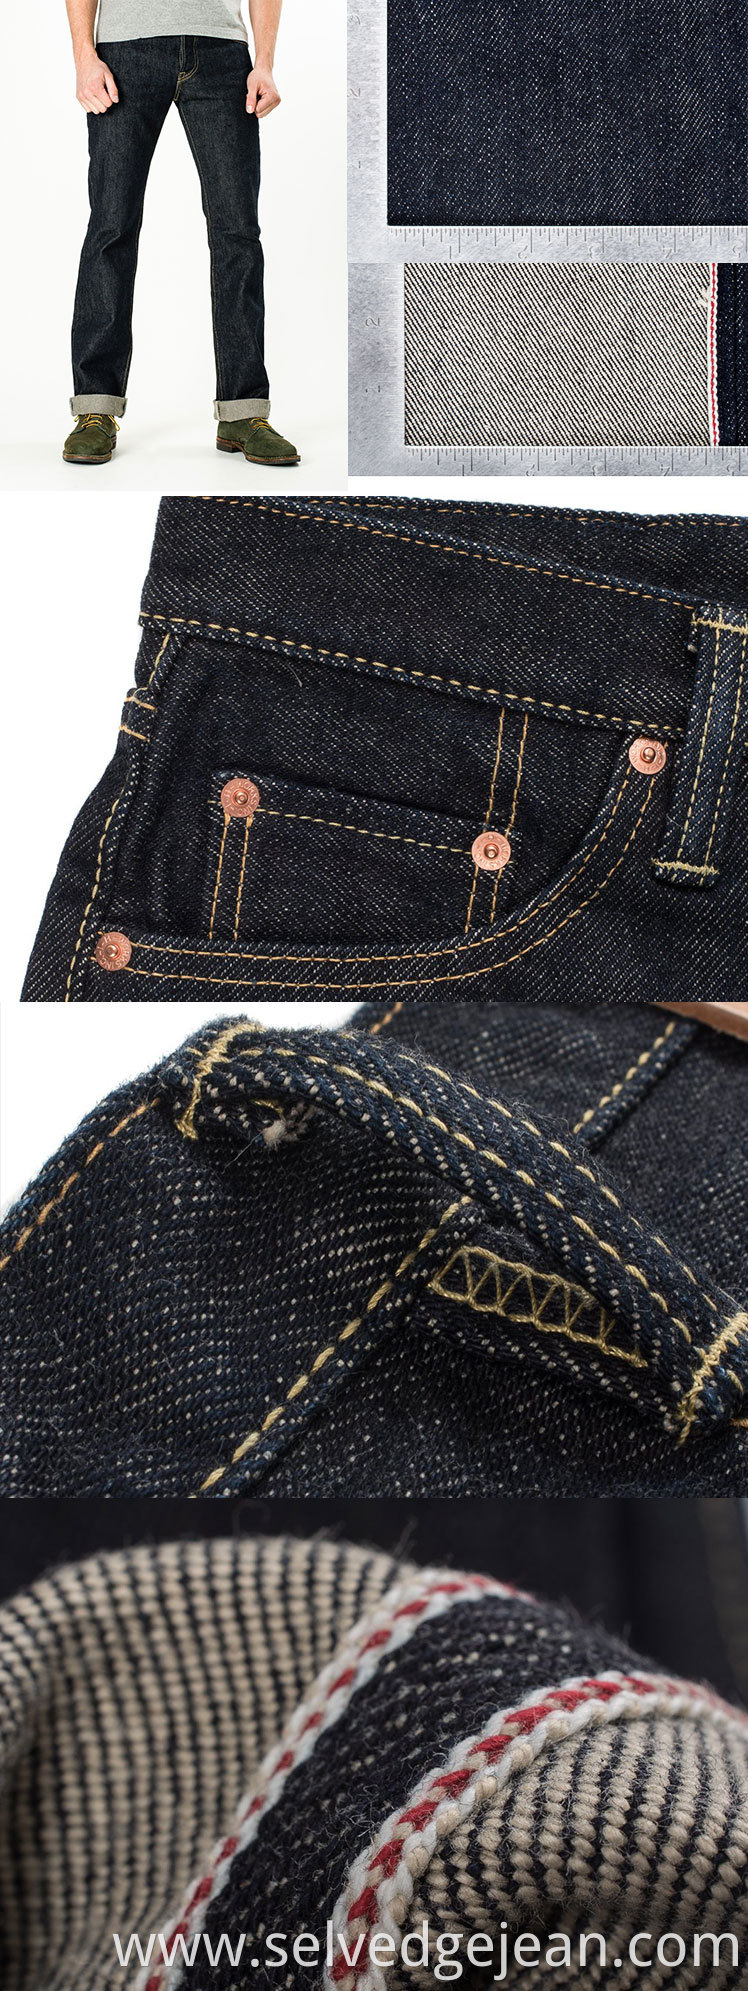 Europe design raw fabric unwash/no shrink 17oz selvedge denim jeans boot cut for men